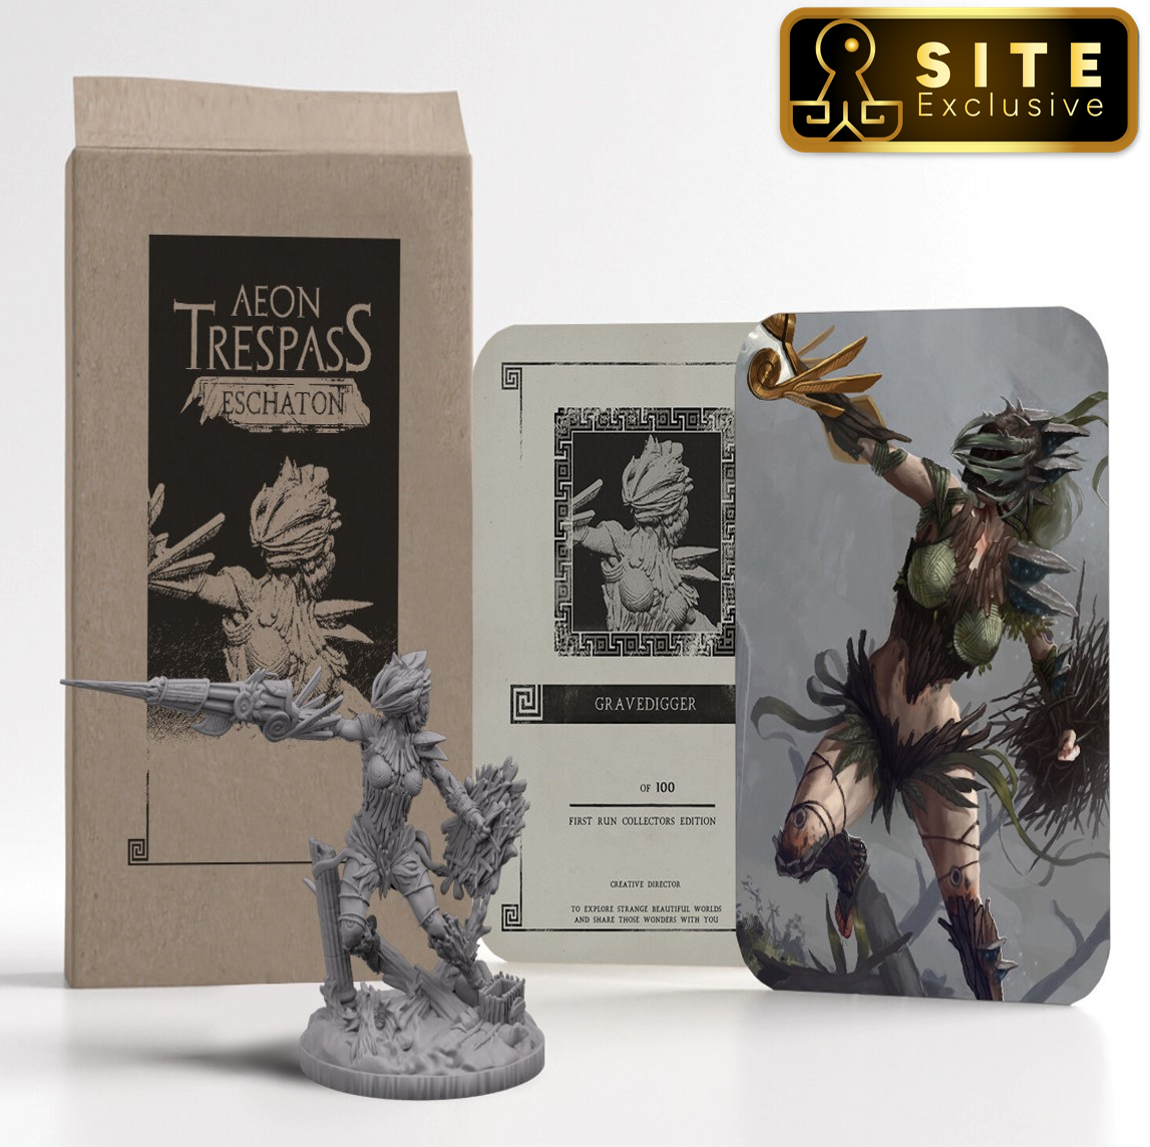 Kickstarter Exclusive Aeon Trespass Board Game, Gravedigger Titan Expansion